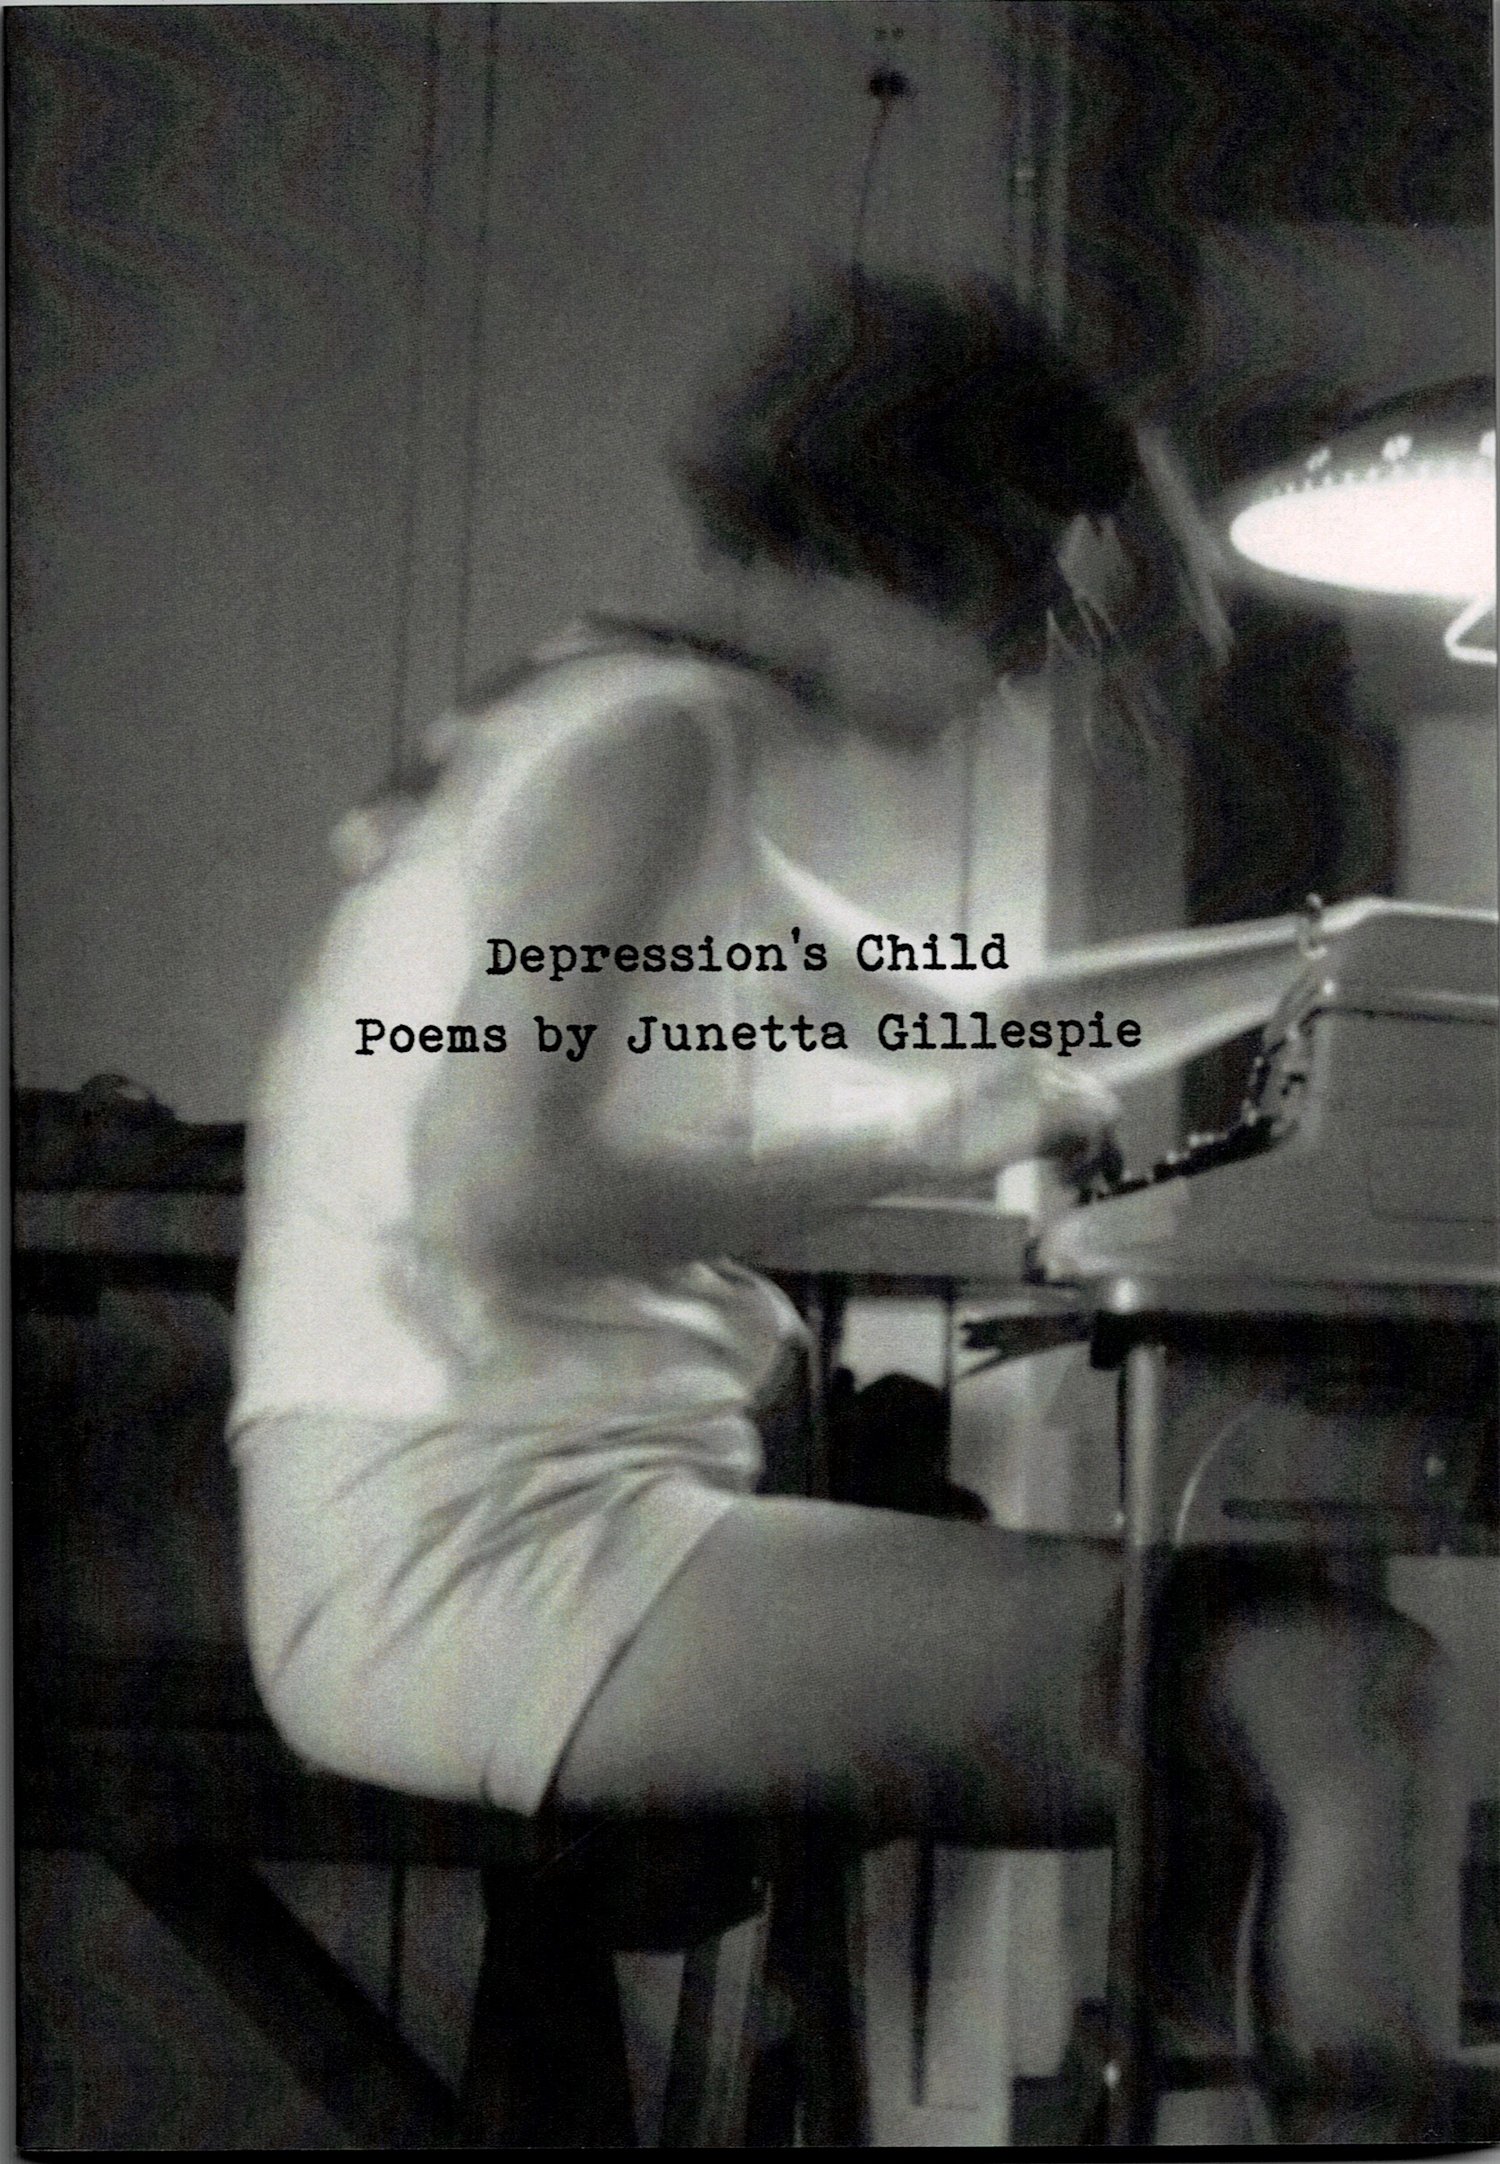 Image of Depression's Child, by Junetta Gillespie